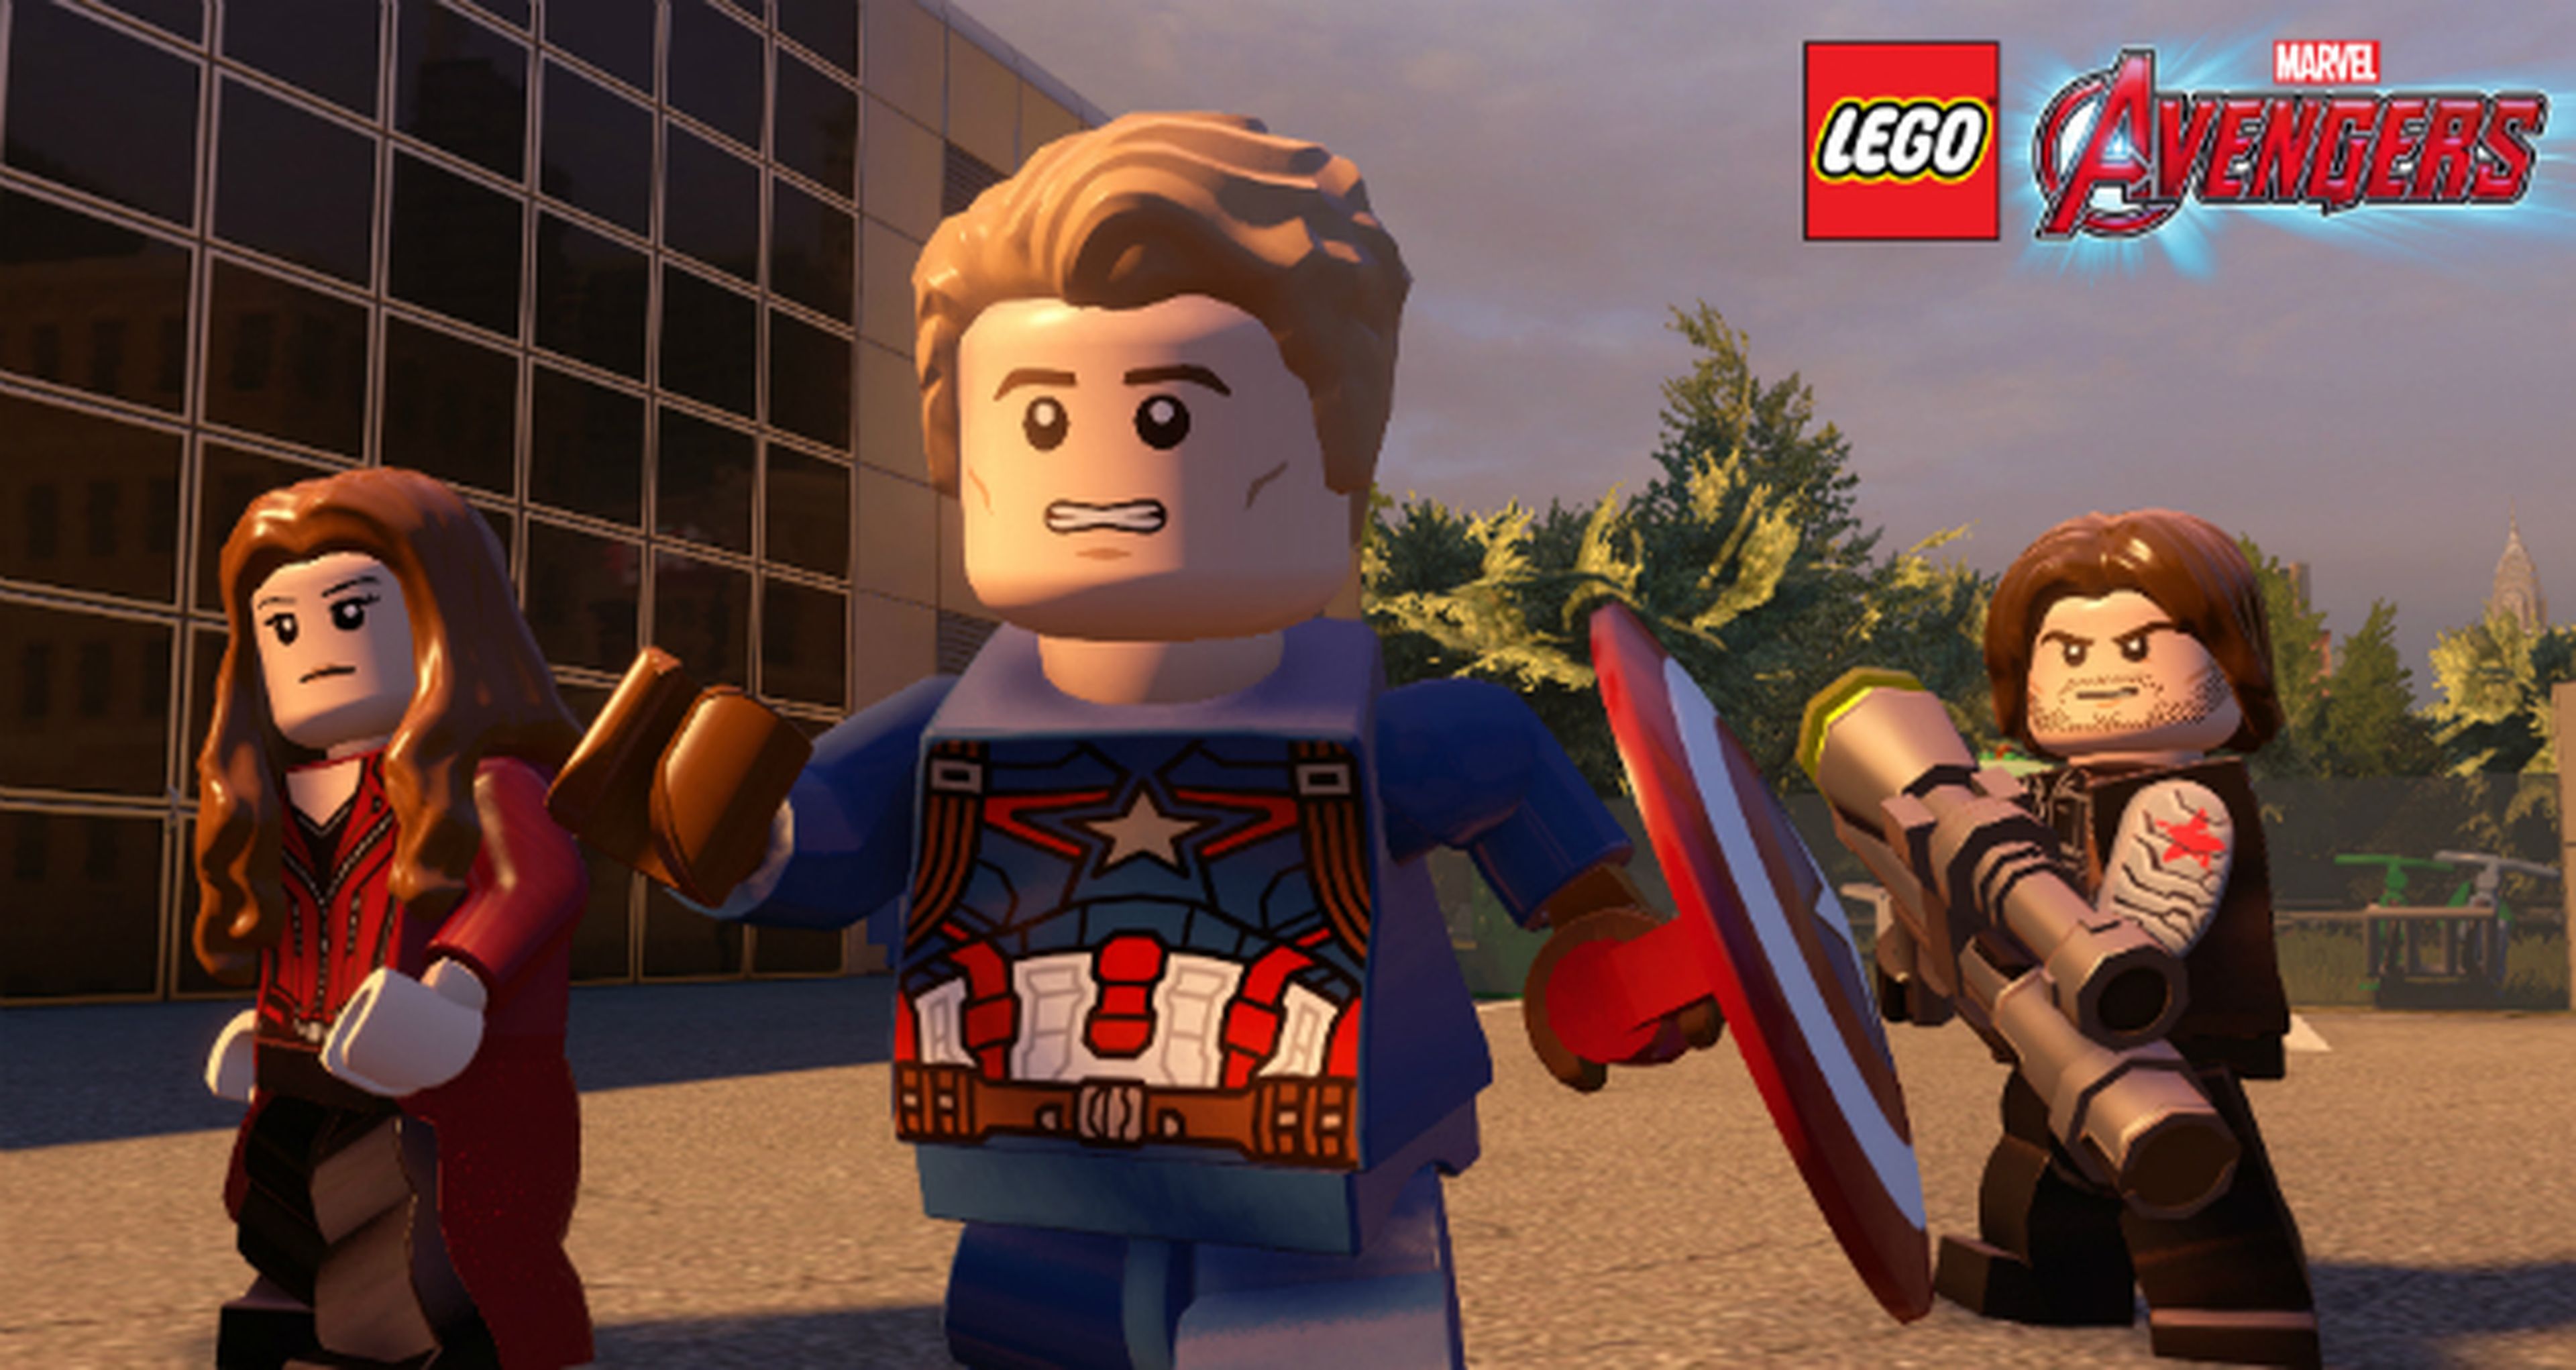 LEGO® Marvel Vengadores Pack de personajes Spider-Man